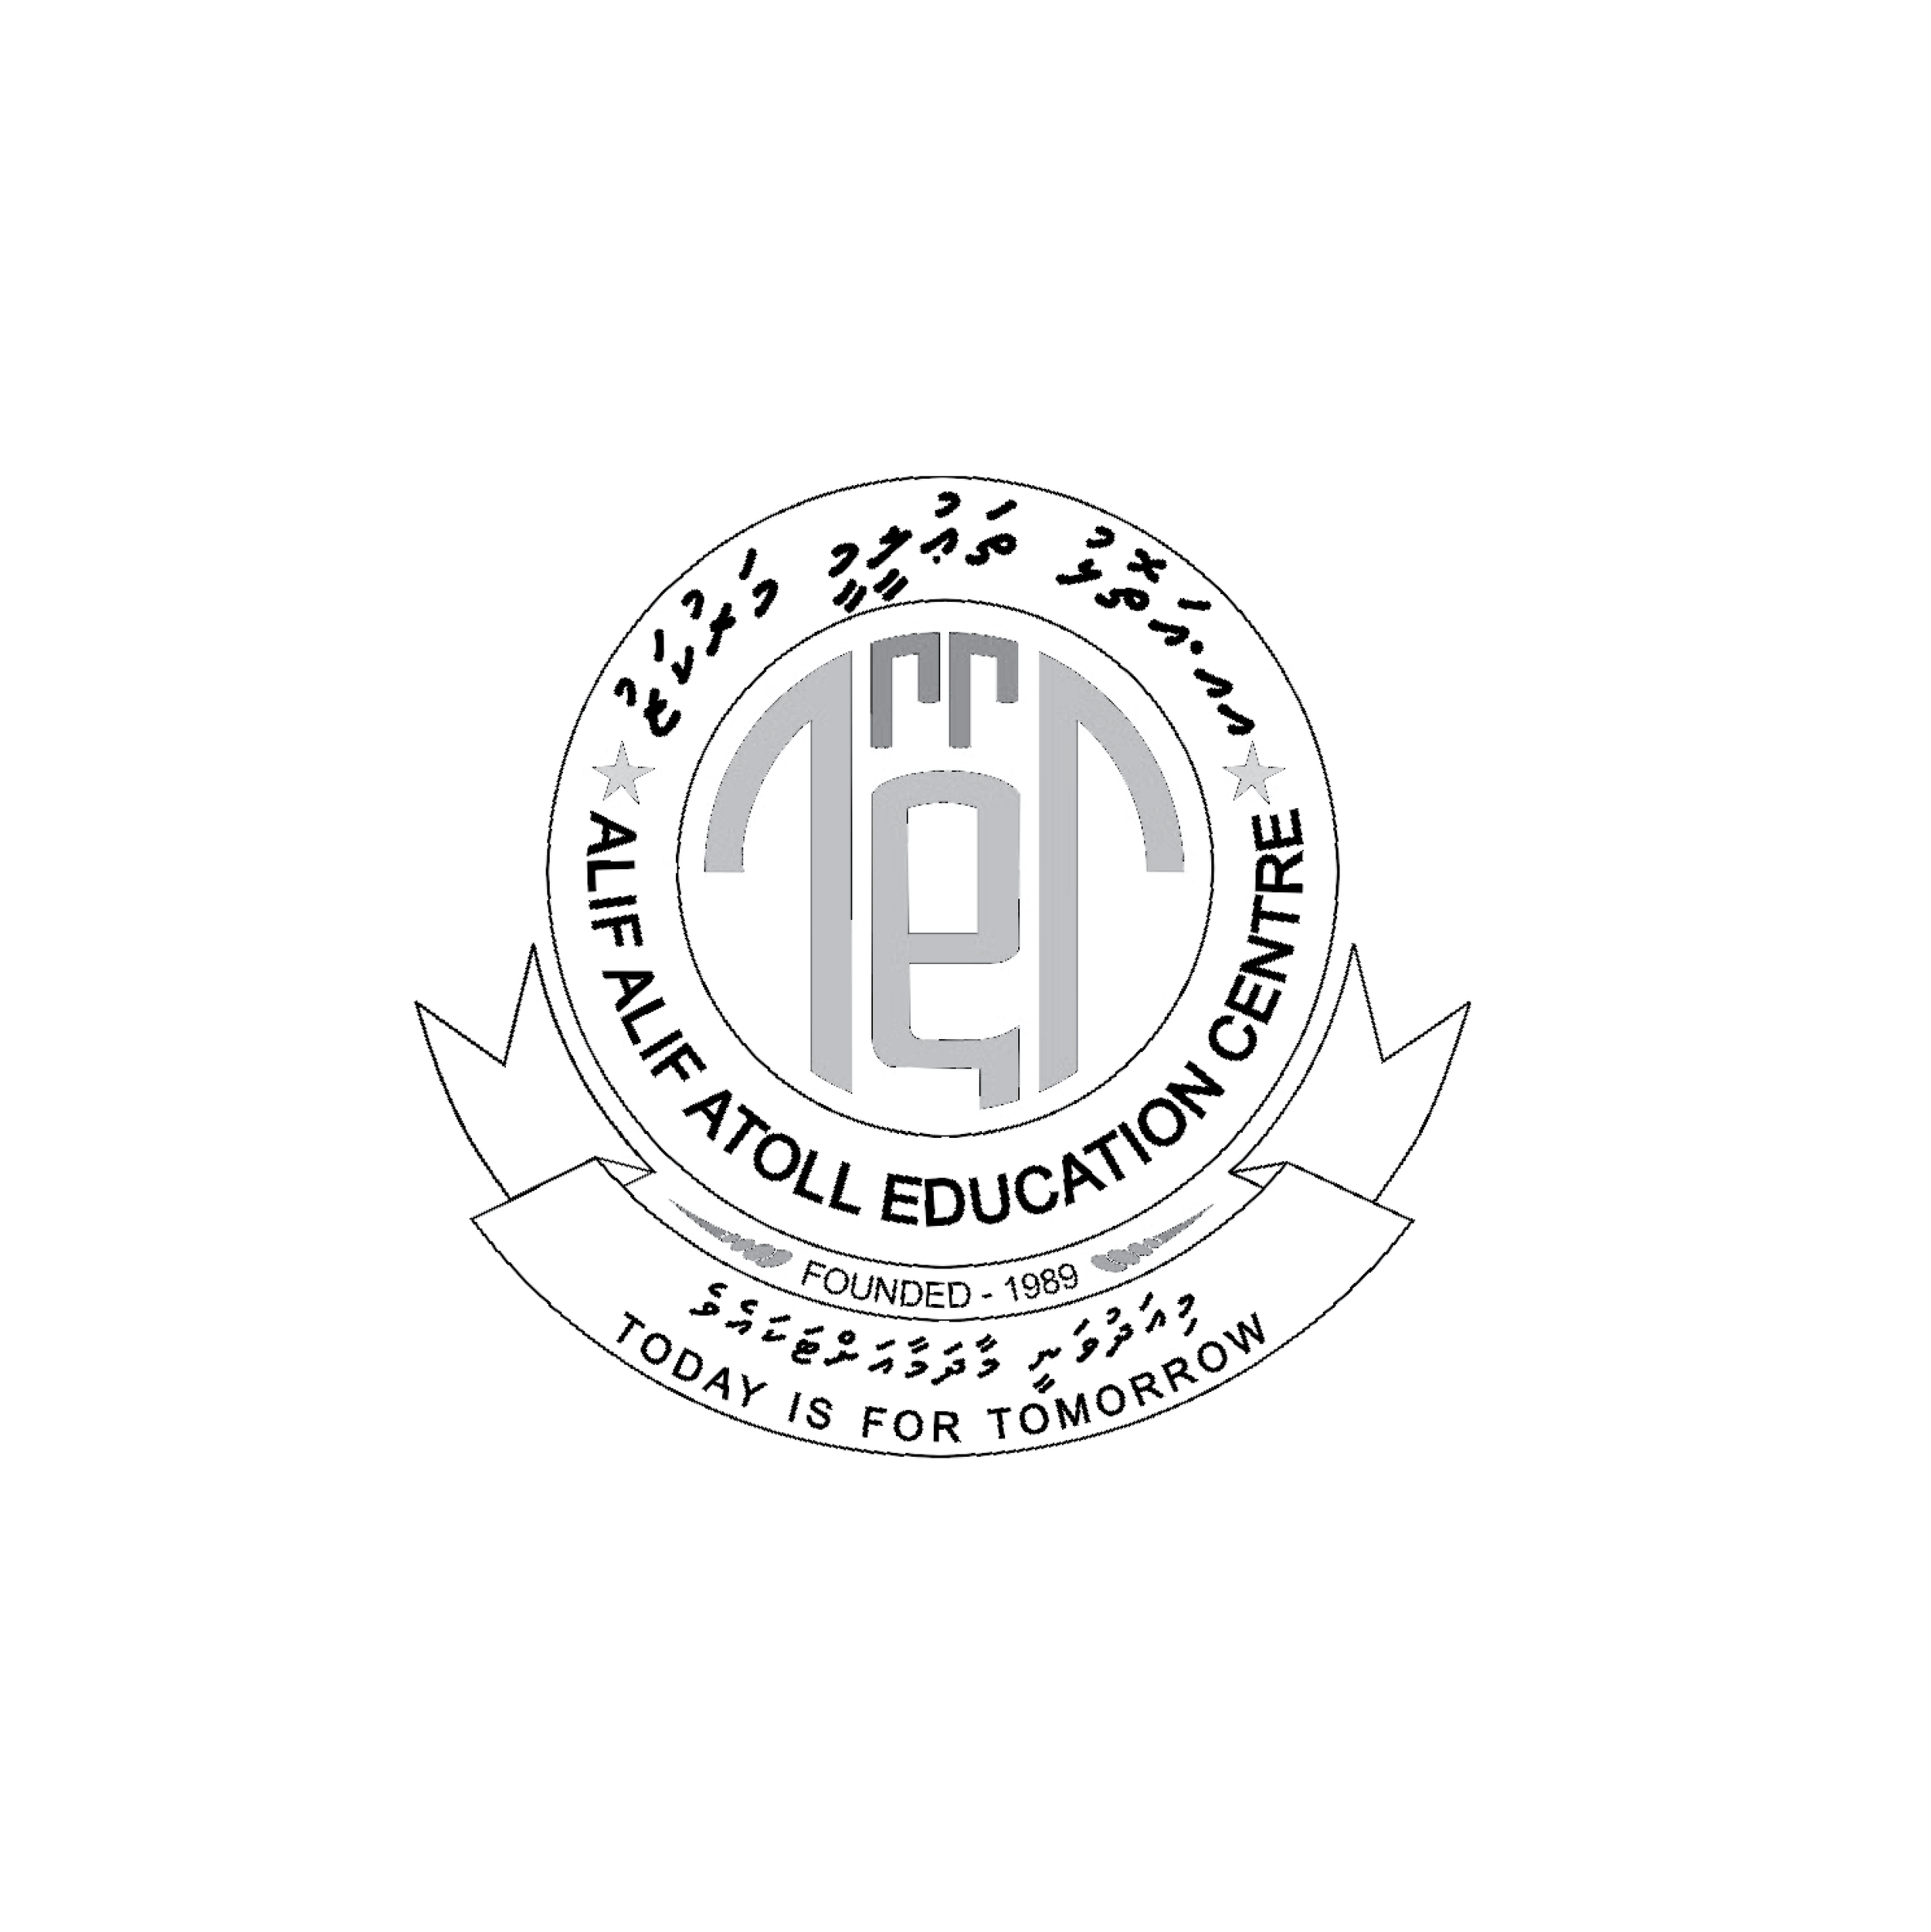 AA Atoll Education Centre